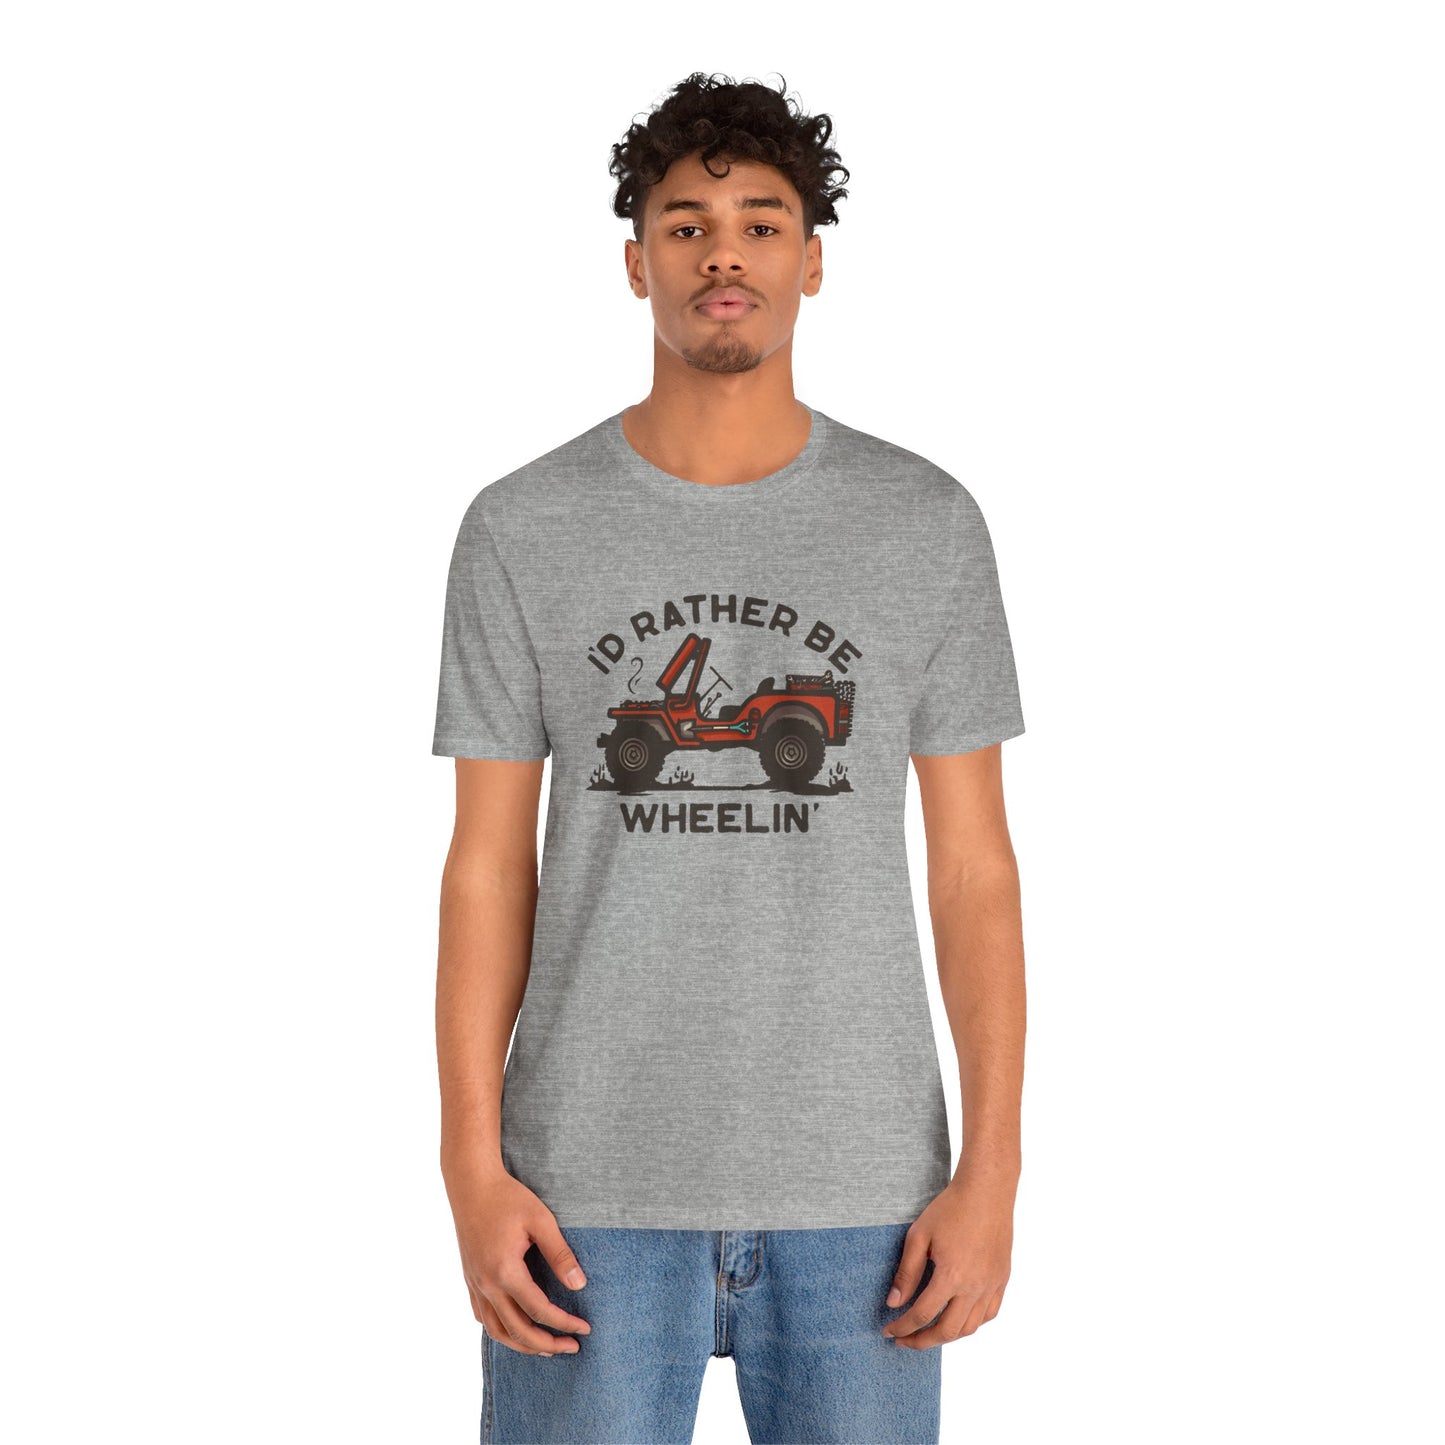 Rather be Wheelin’ T- Shirt